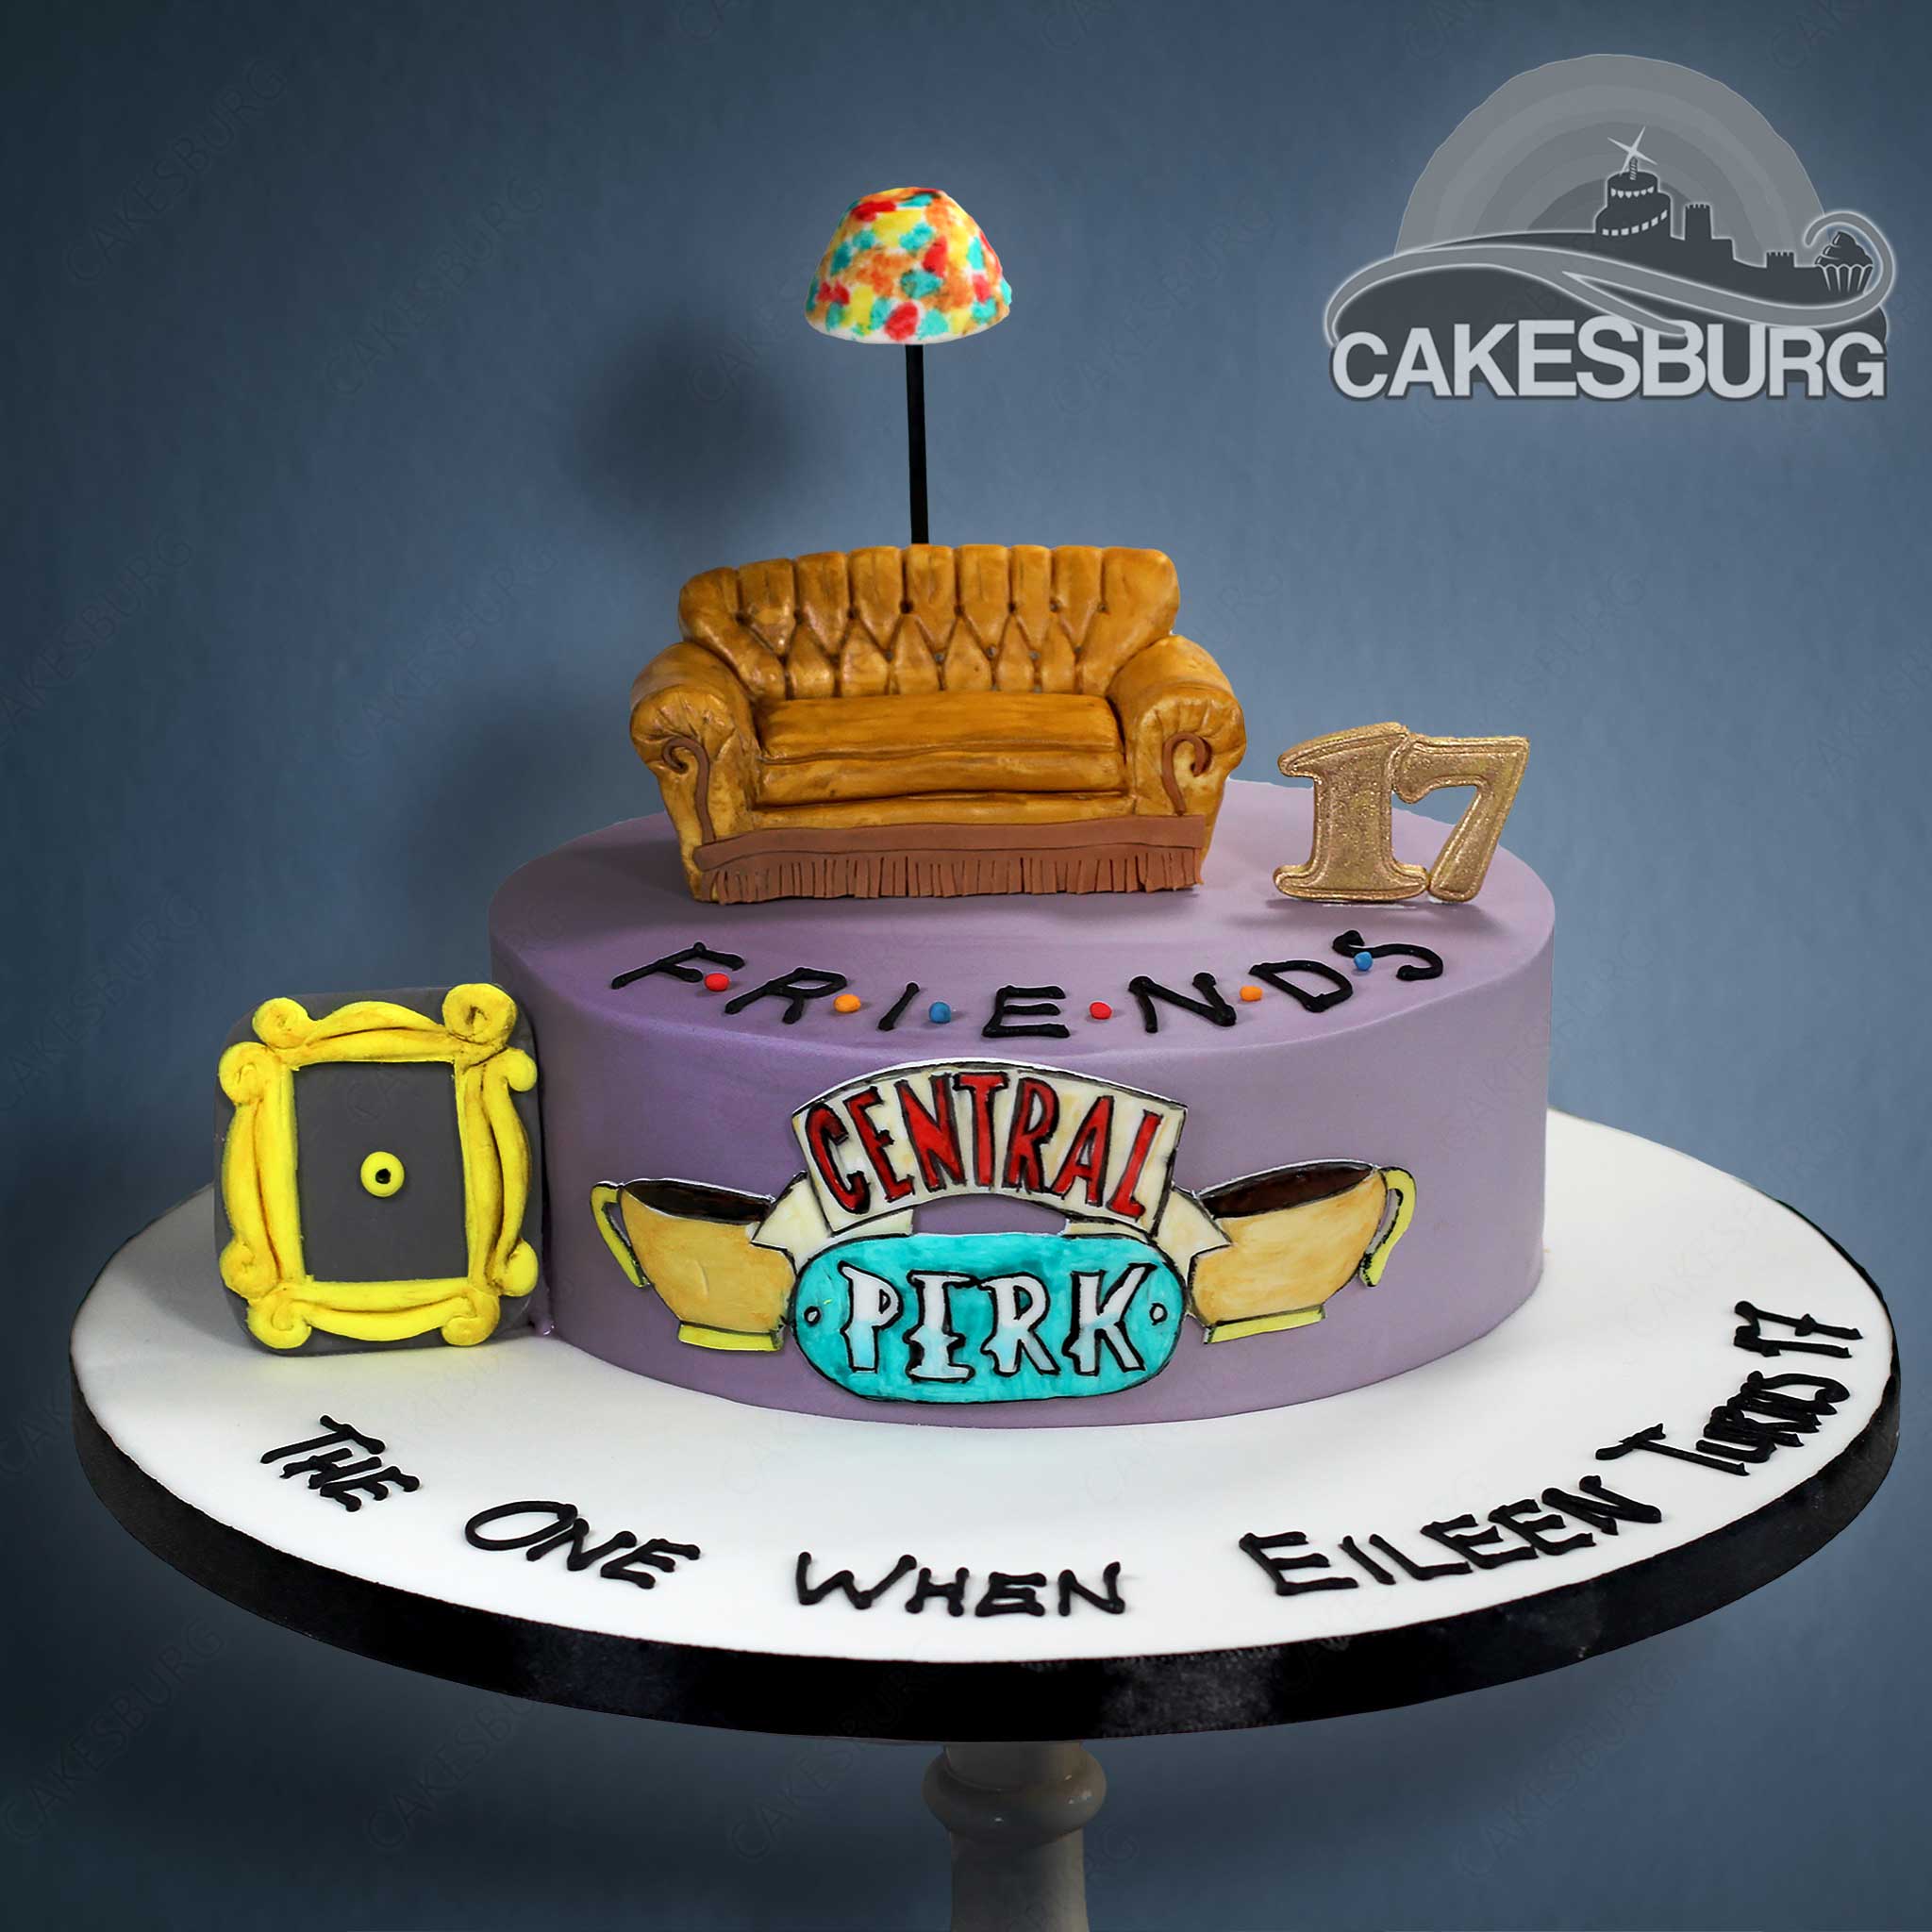 8 Get together cakes ideas | family reunion cakes, cupcake cakes, cake